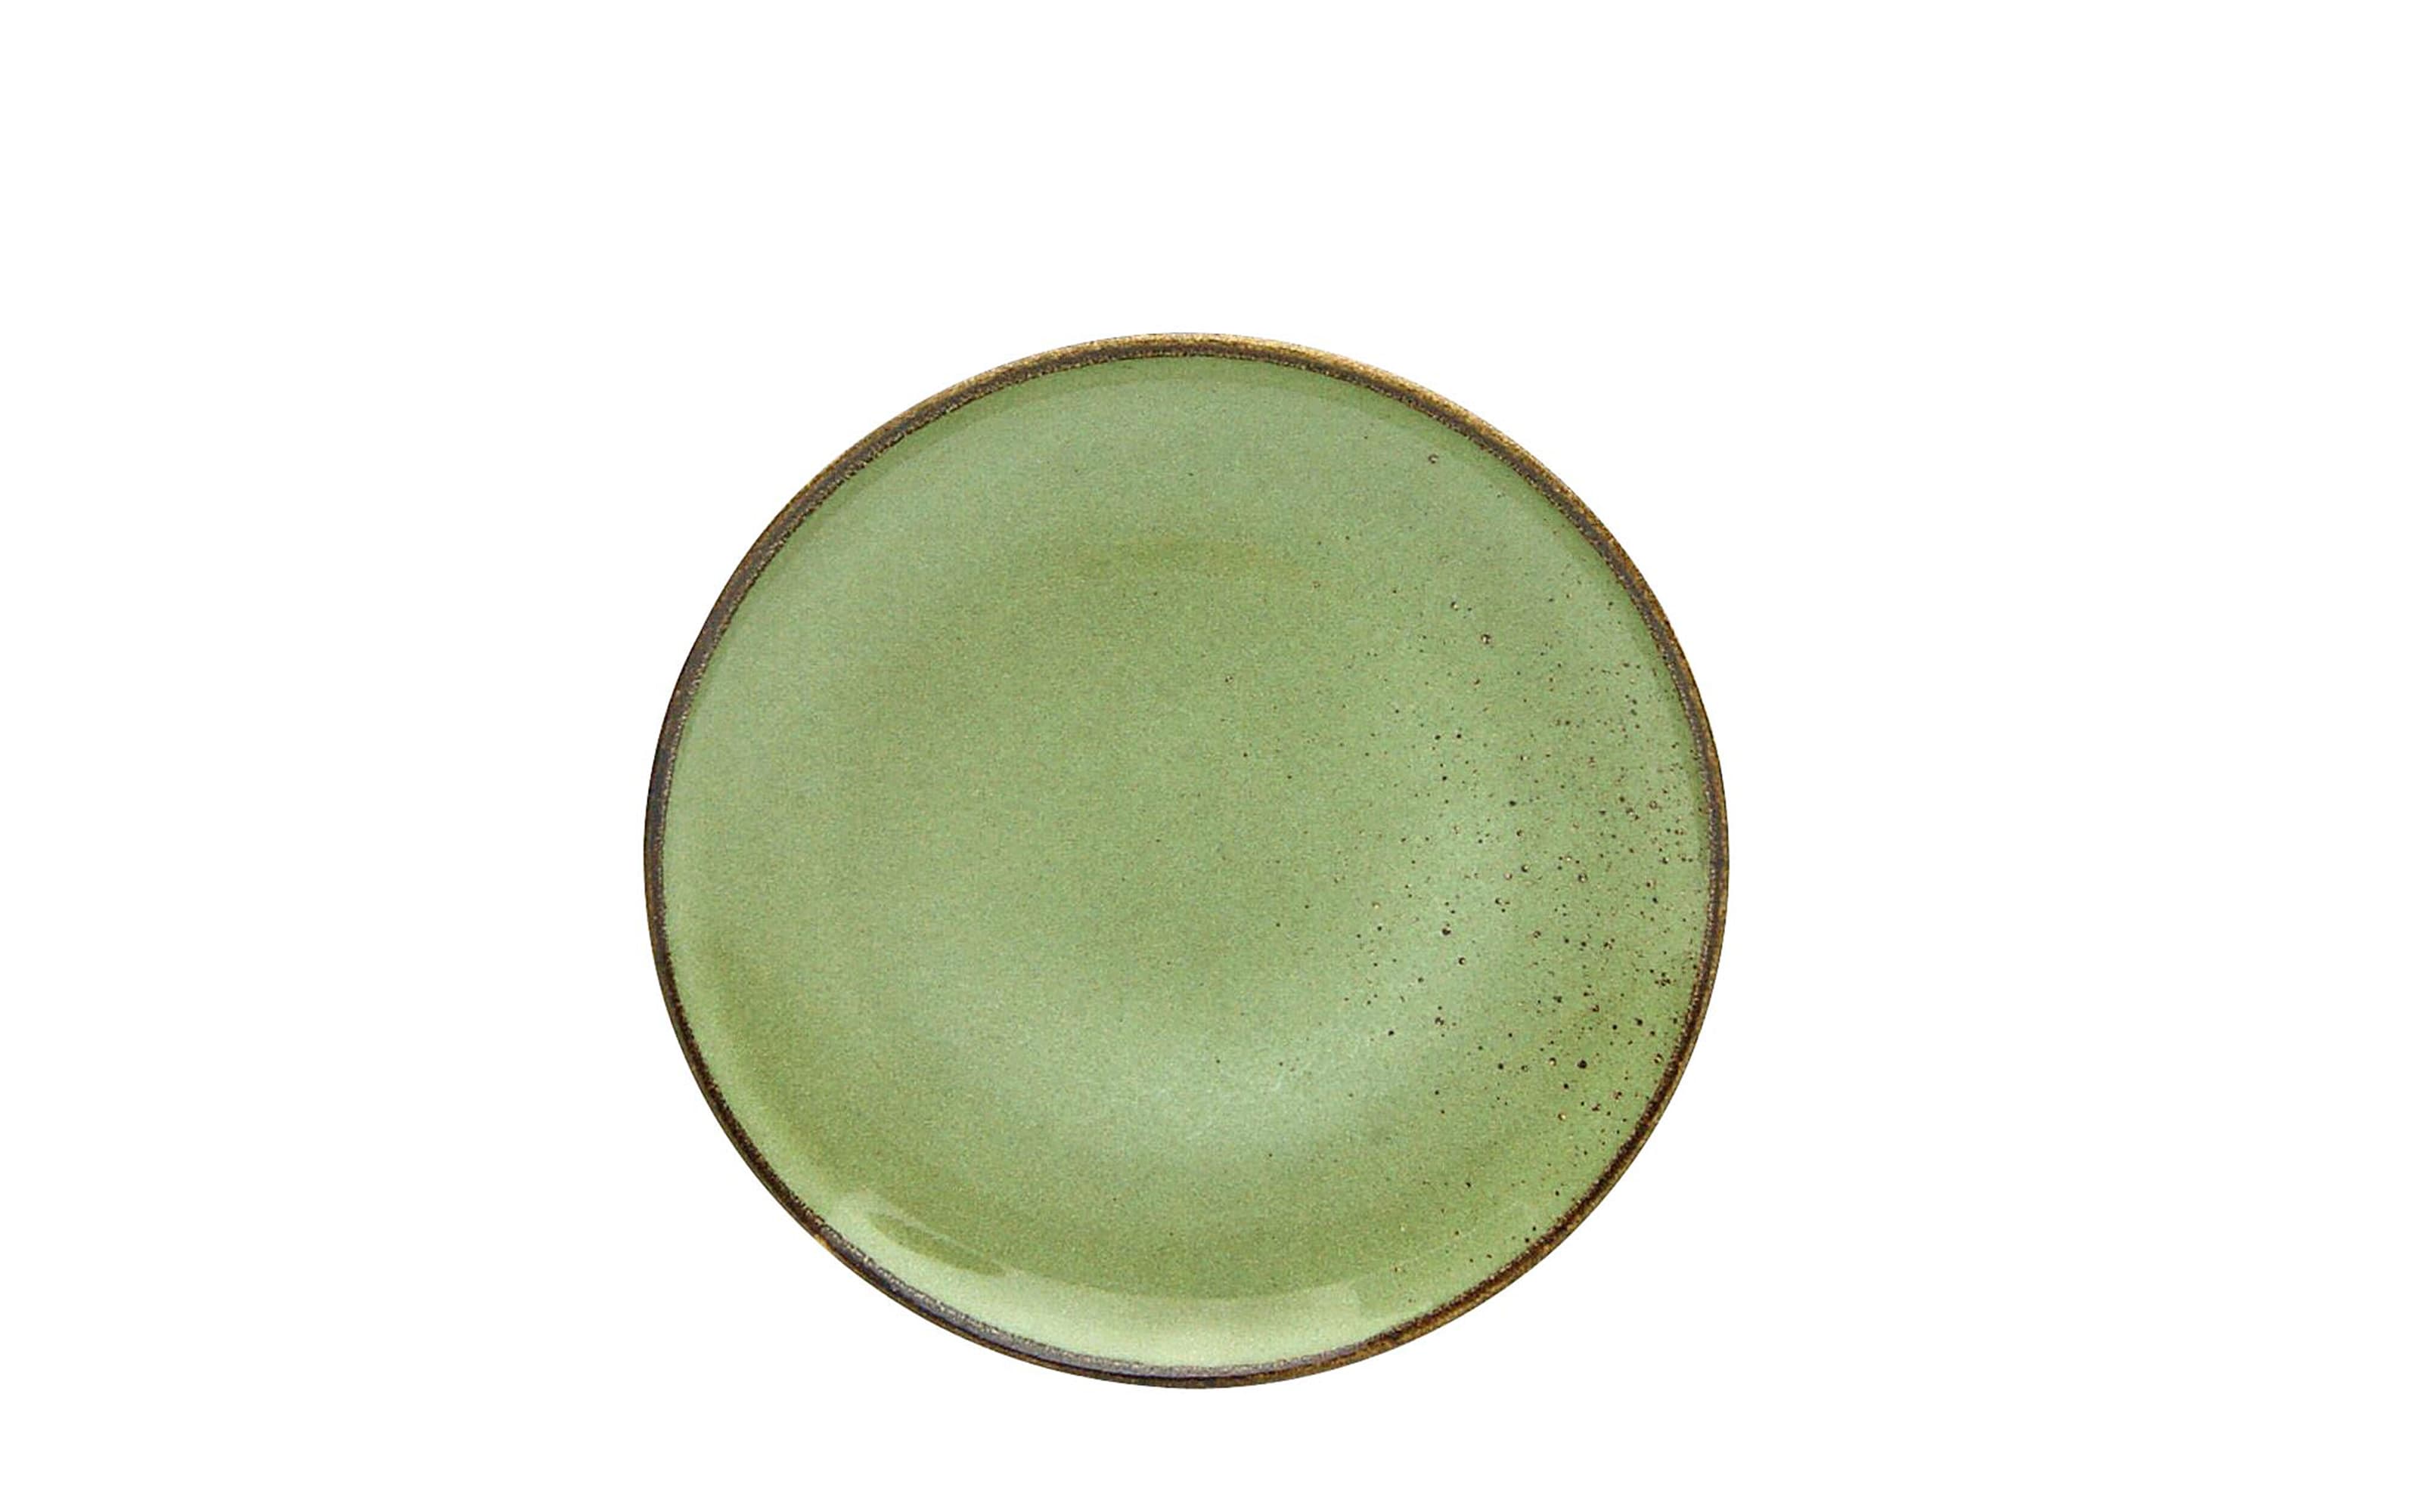 Dessertteller Nature Collection, naturgrün, 21 cm